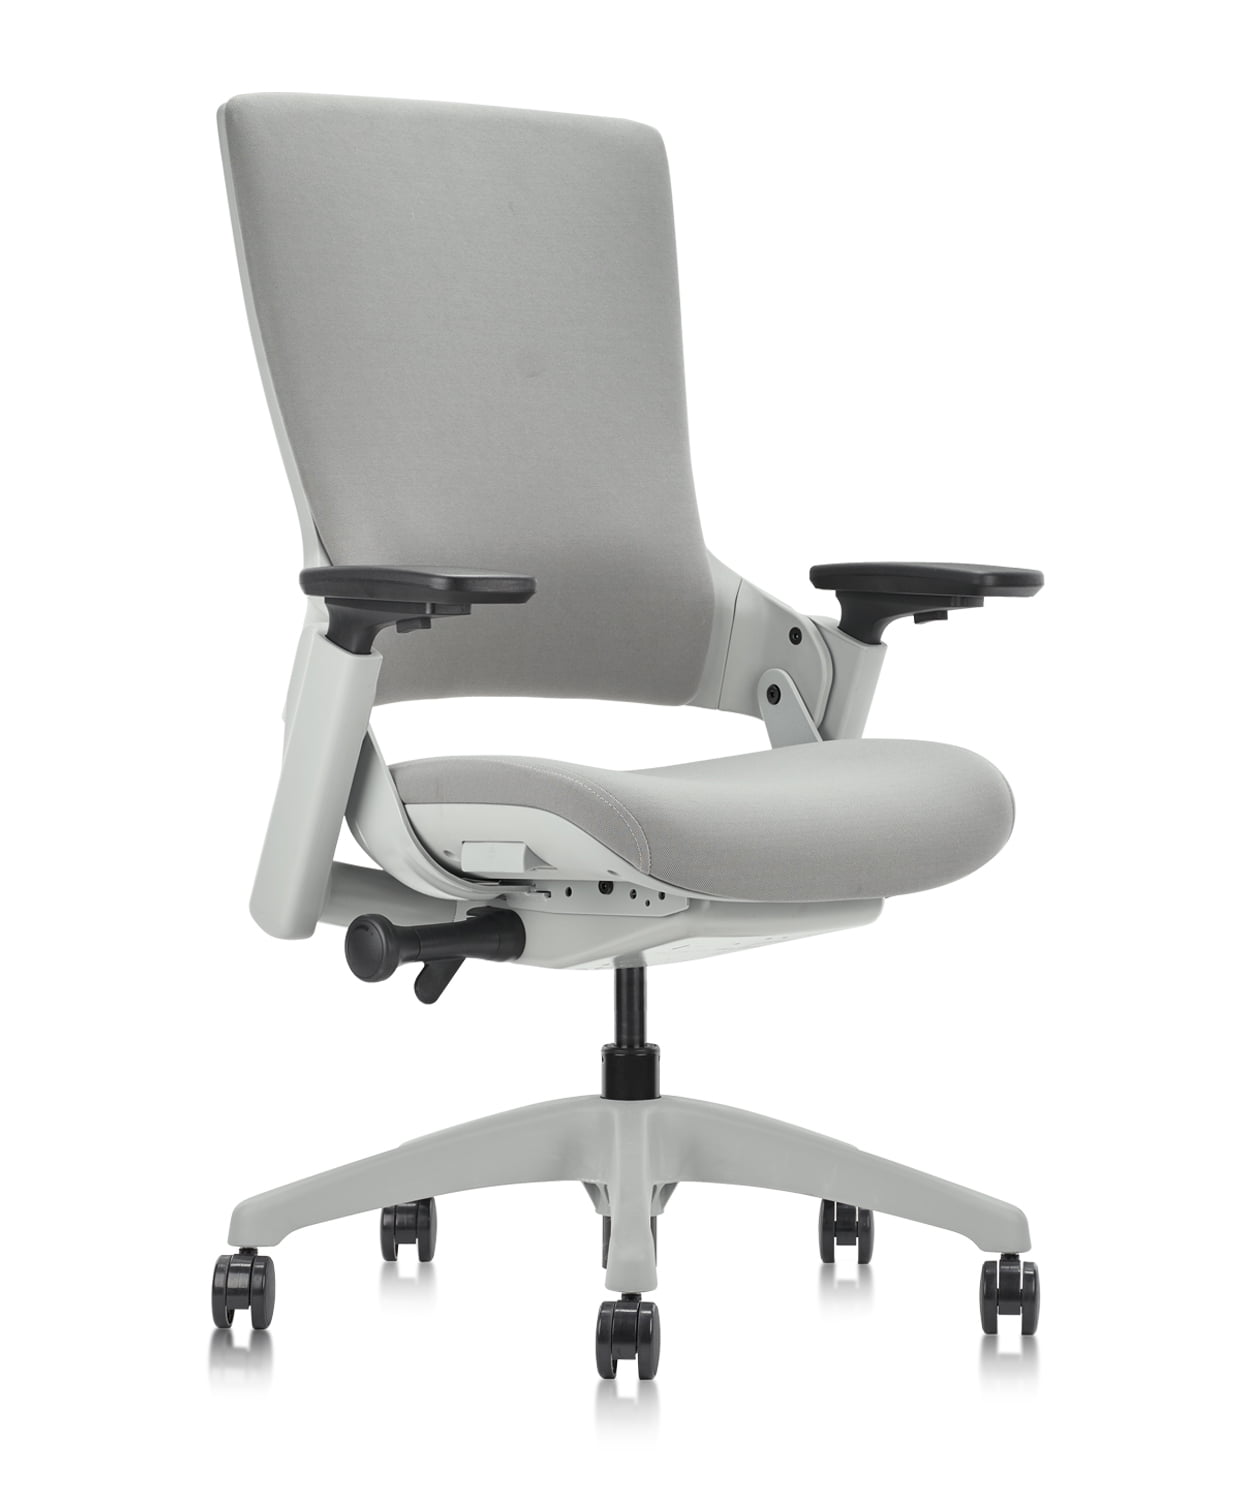 CLATINA Ergonomic High Mesh Swivel Executive Chair Adjustable Height Arm Rest 